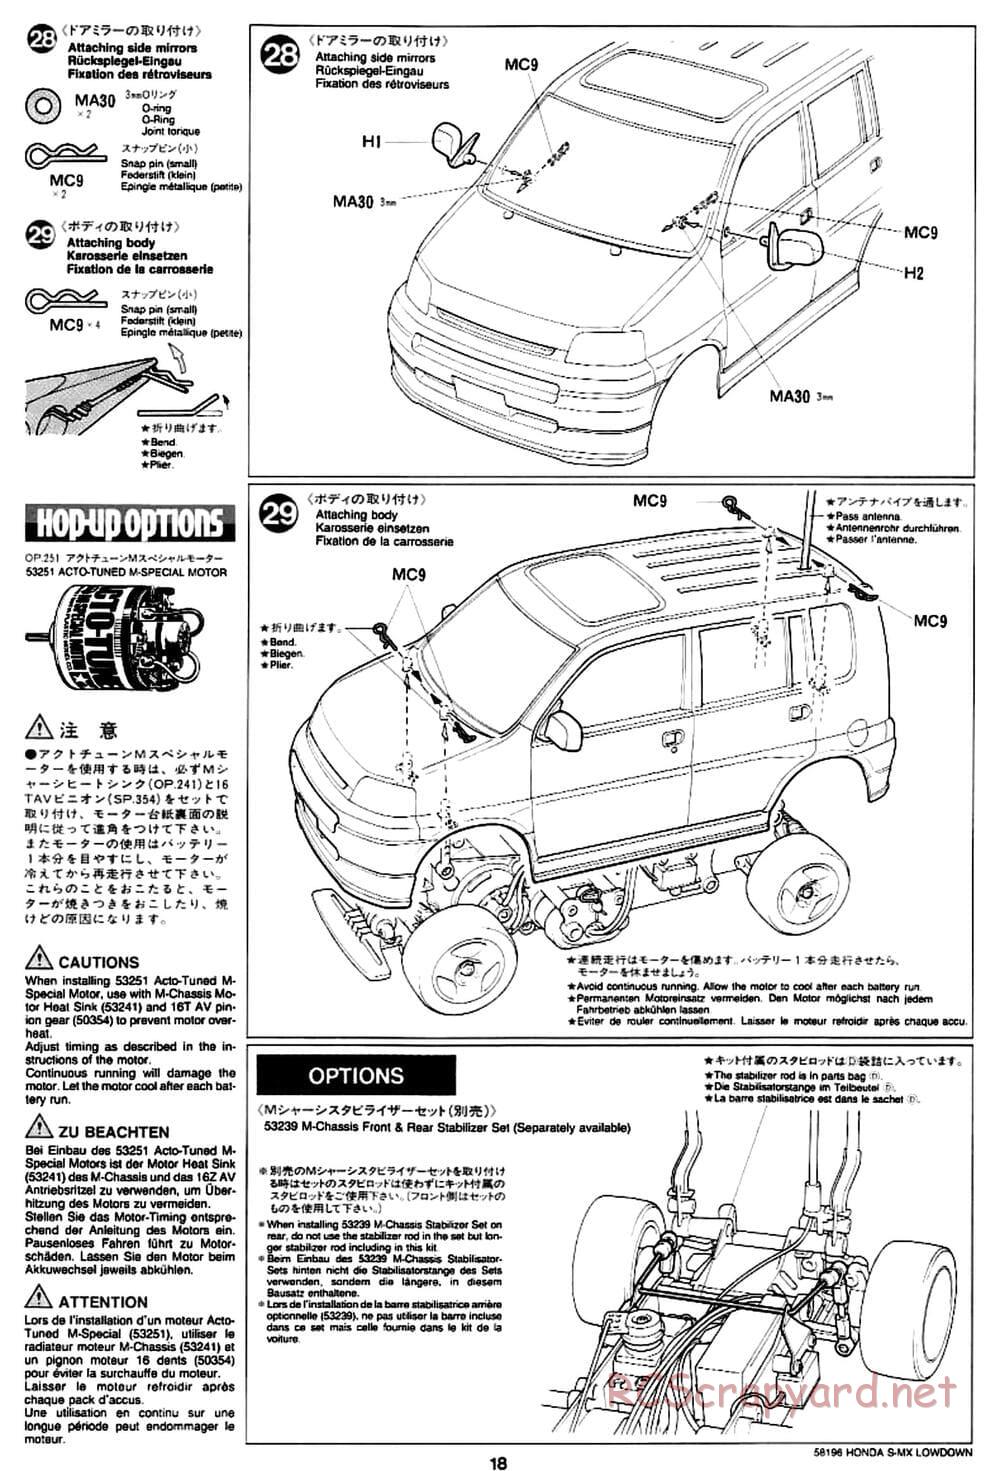 Tamiya - Honda S-MX Lowdown - M01 Chassis - Manual - Page 18